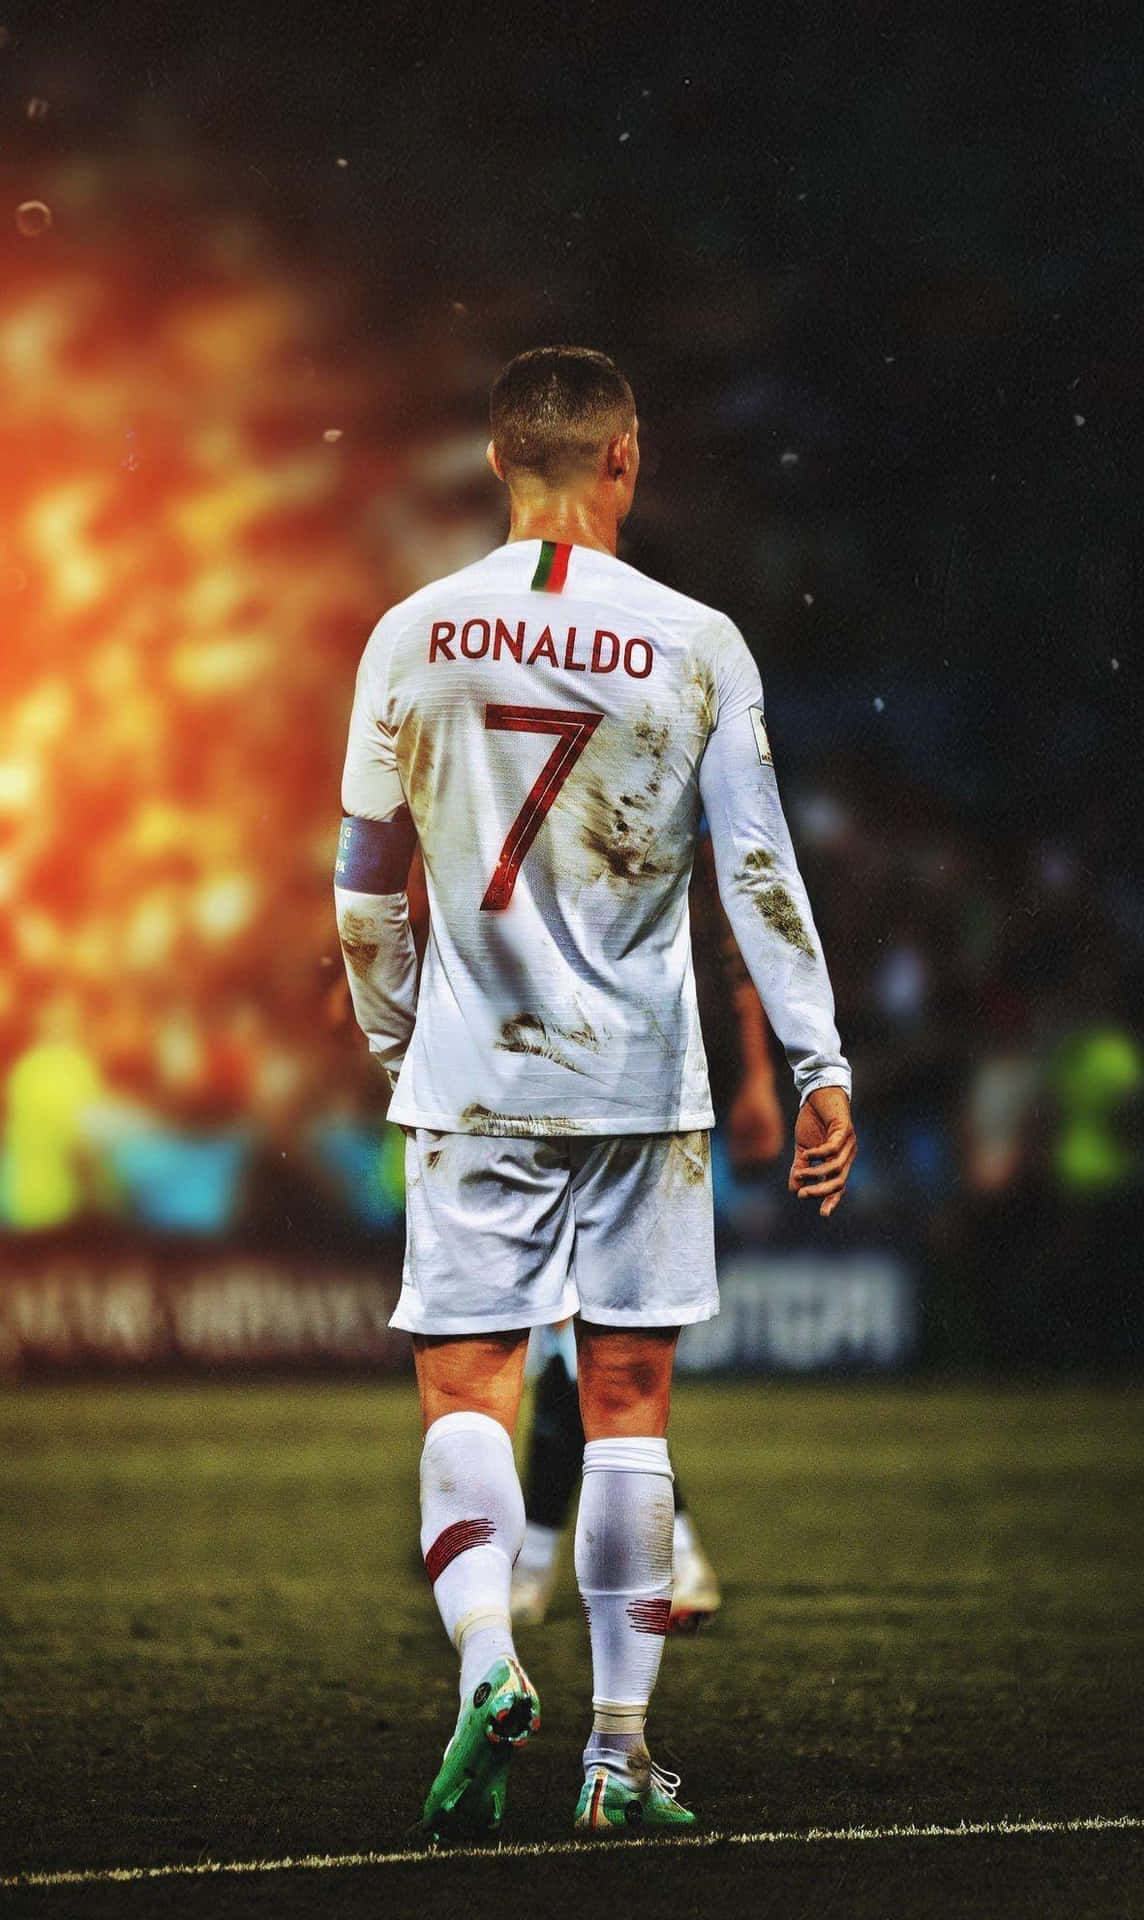 Ronaldo Number7 Jersey Back View Wallpaper